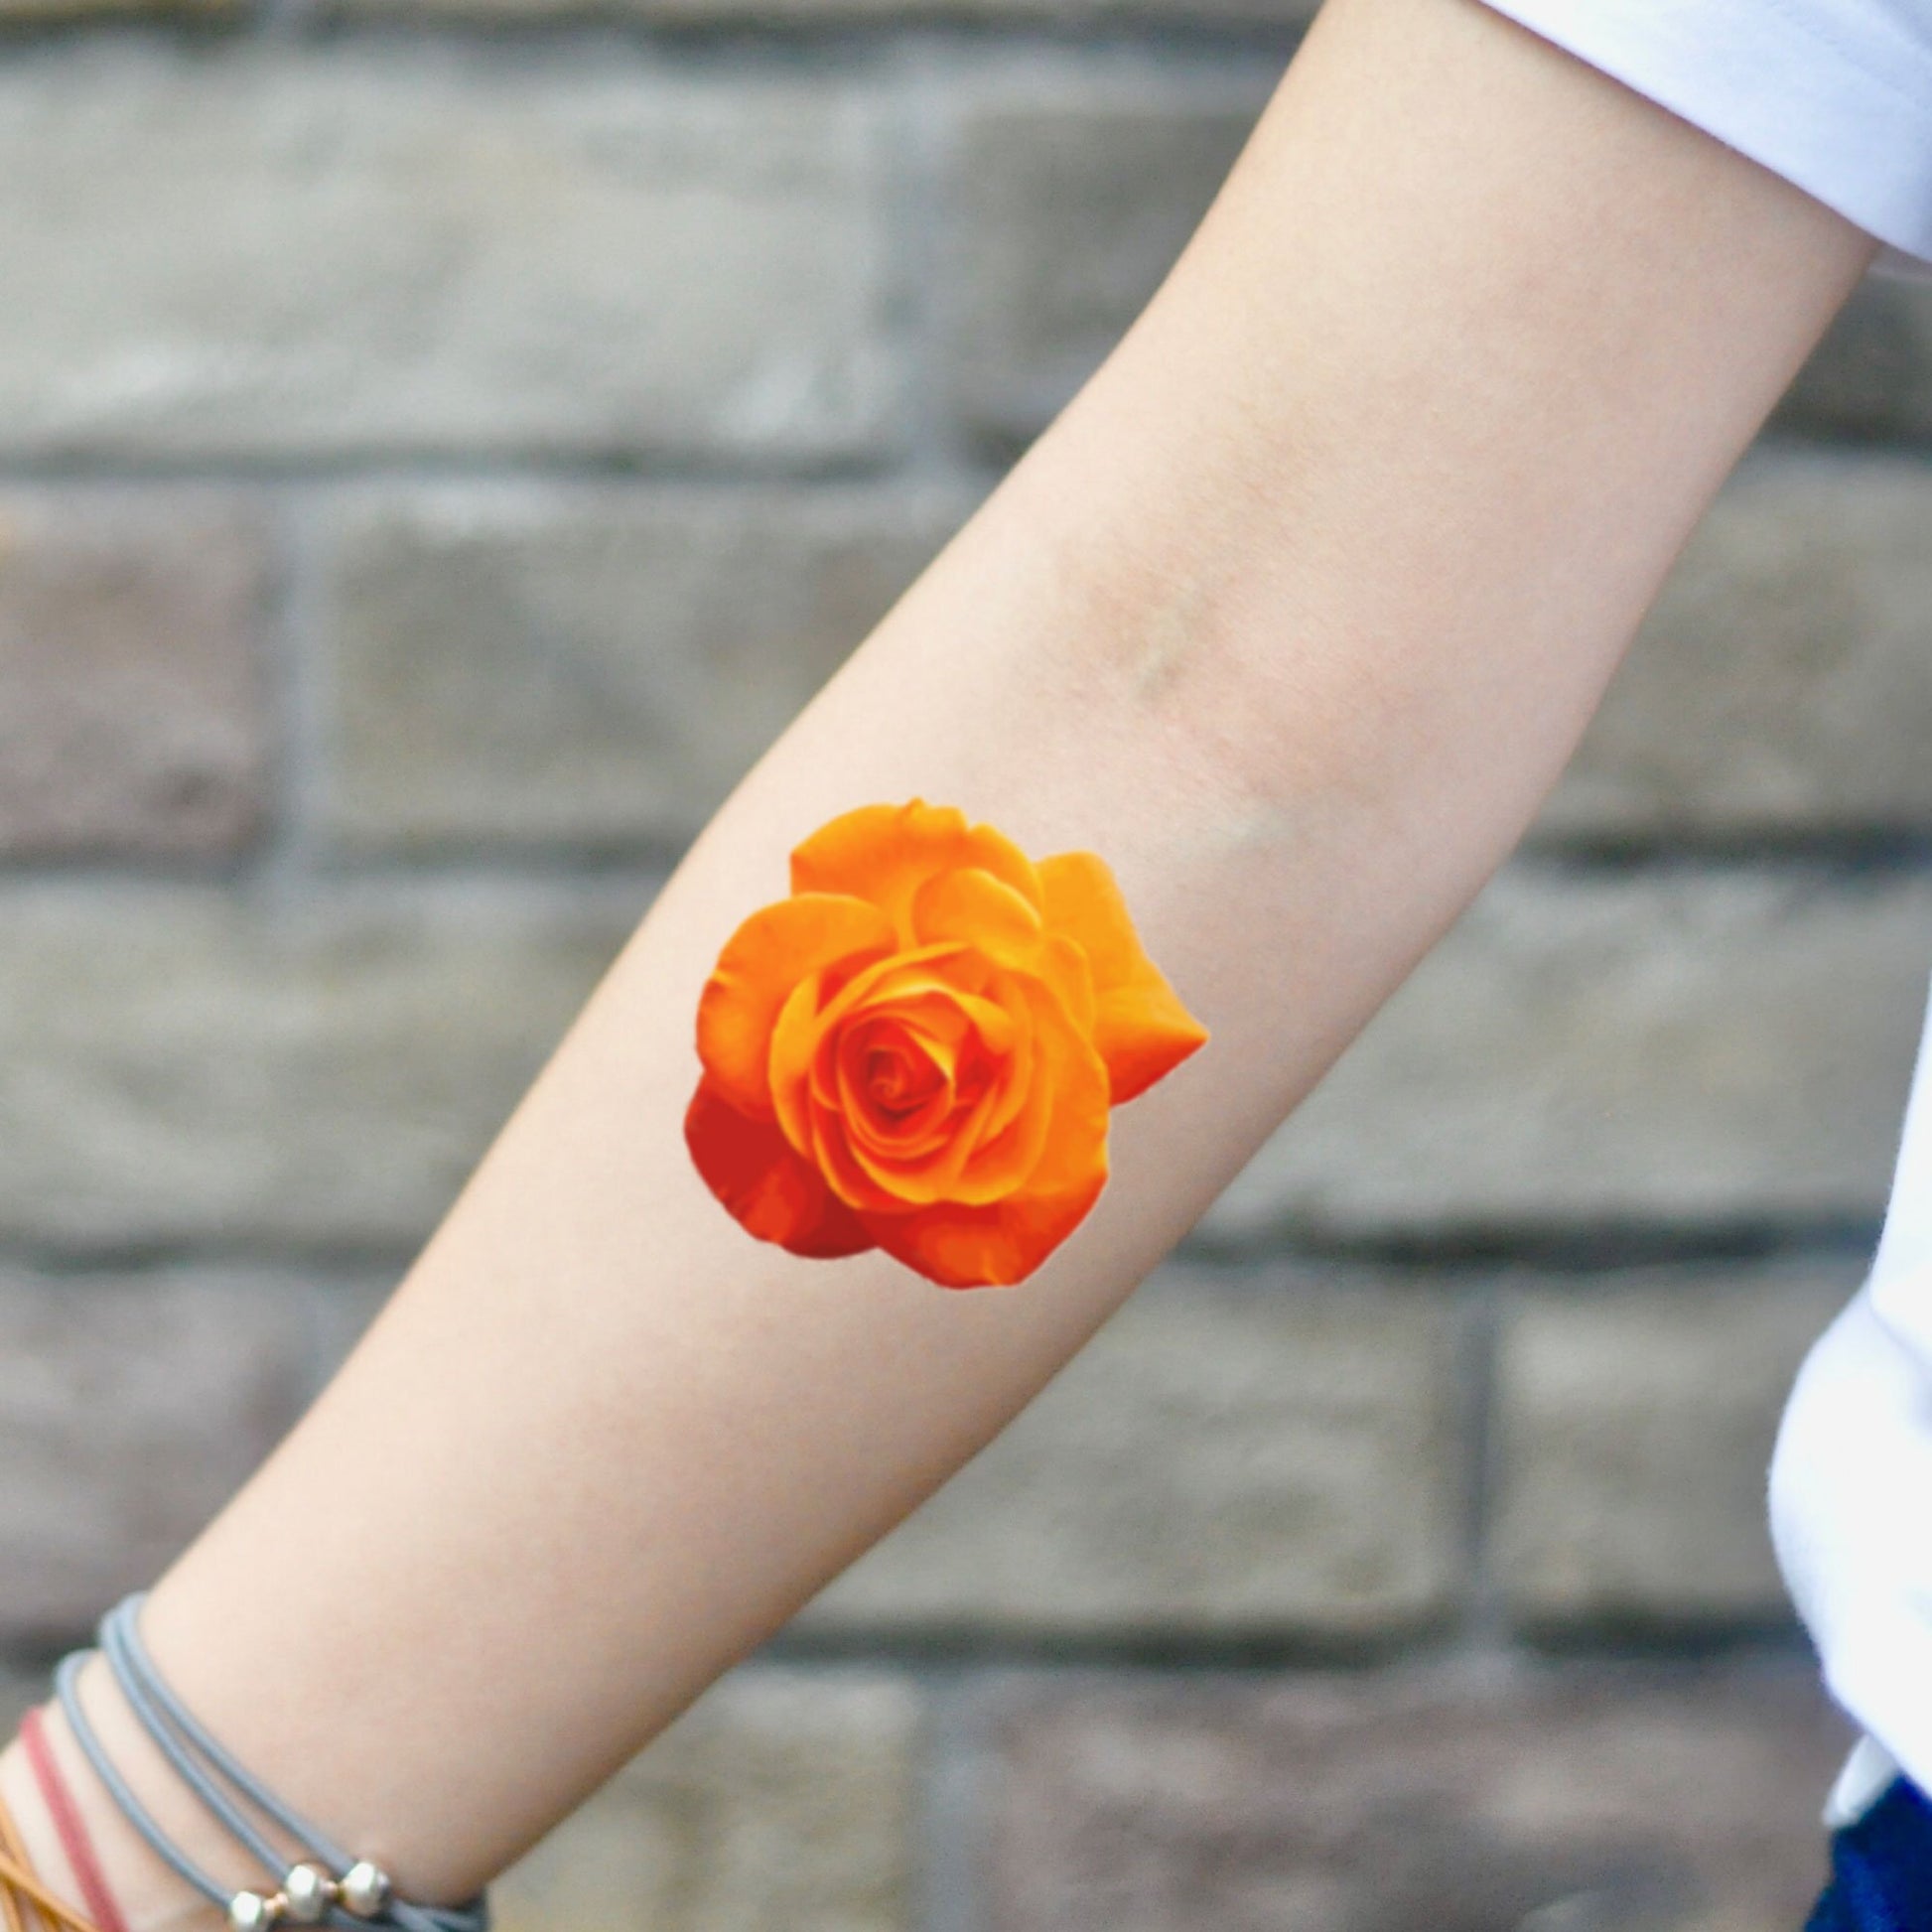 fake small orange rose realistic flower temporary tattoo sticker design idea on inner arm